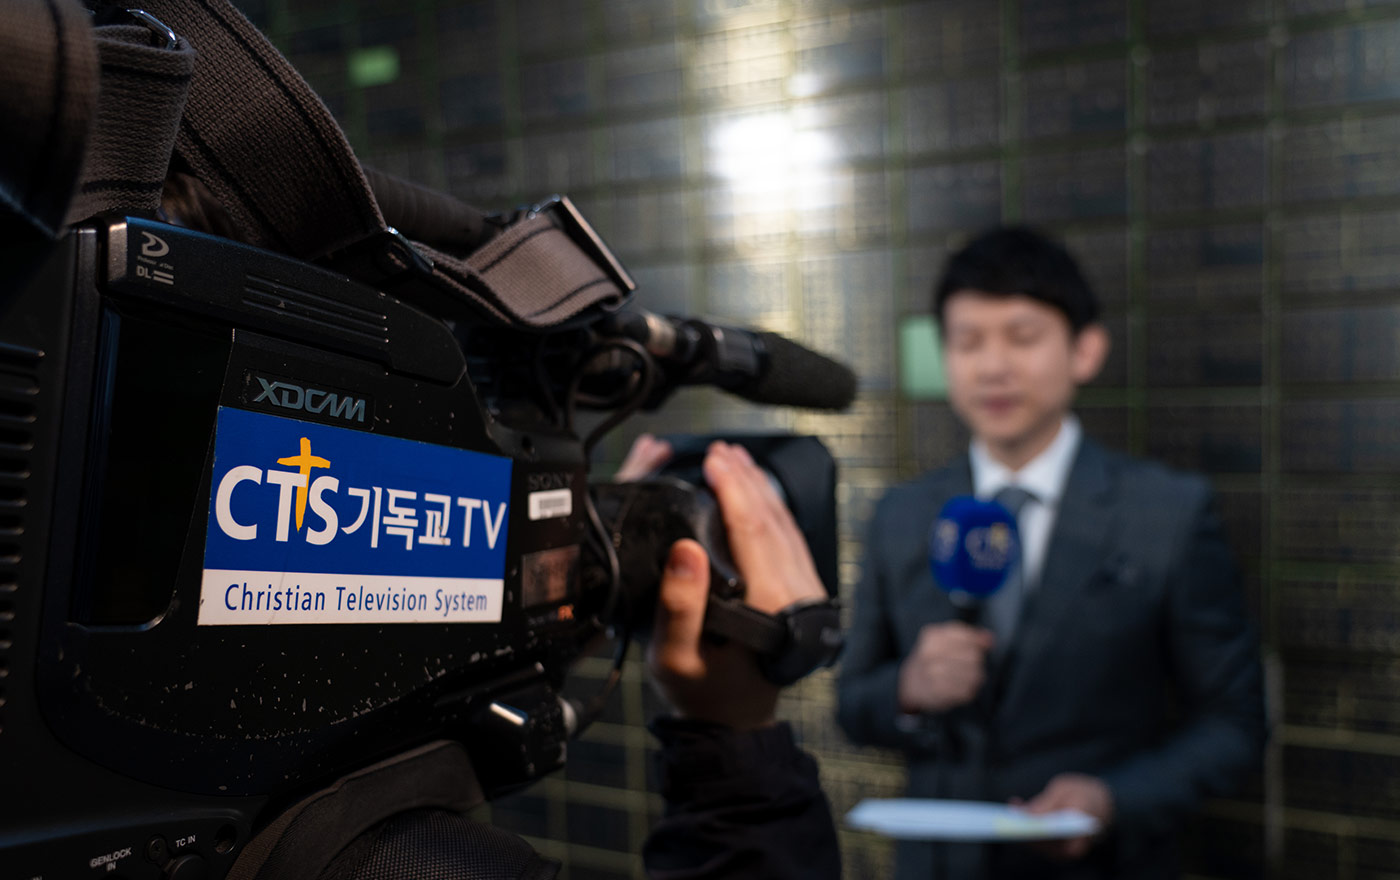 CTS 기독교 TV에서 앵커를 촬영하고 있는 모습